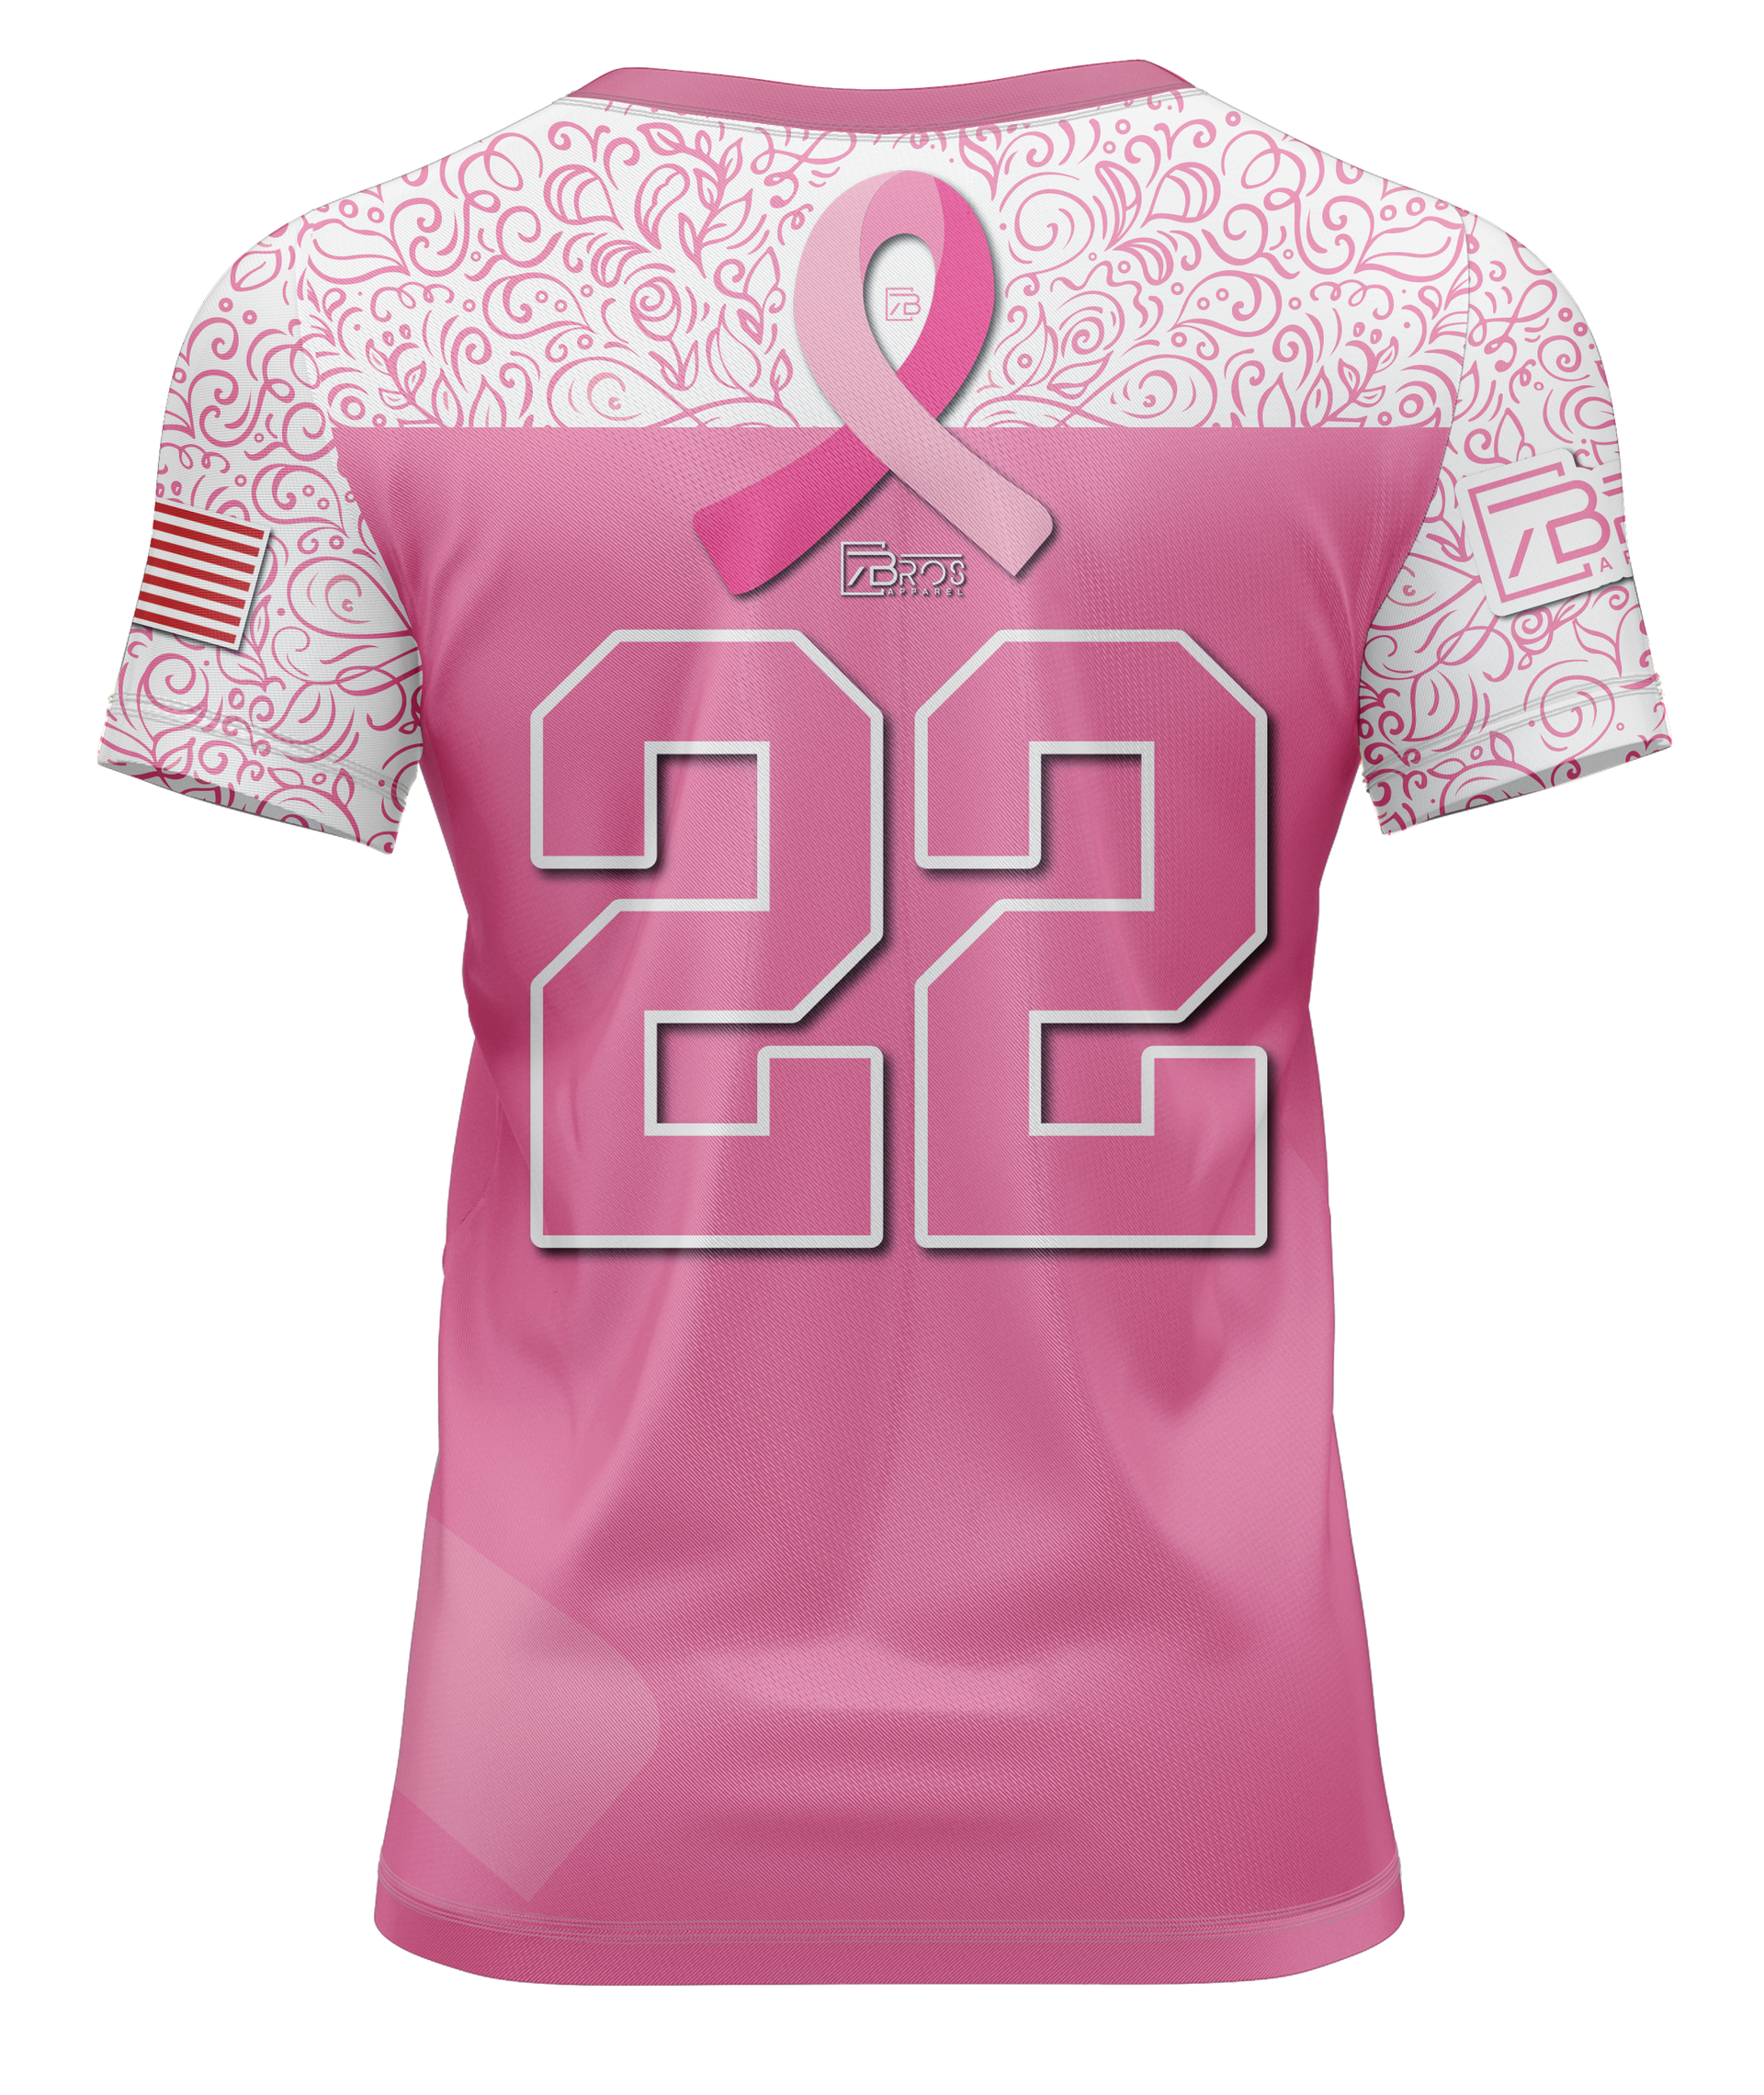 breast cancer awareness baseball jerseys